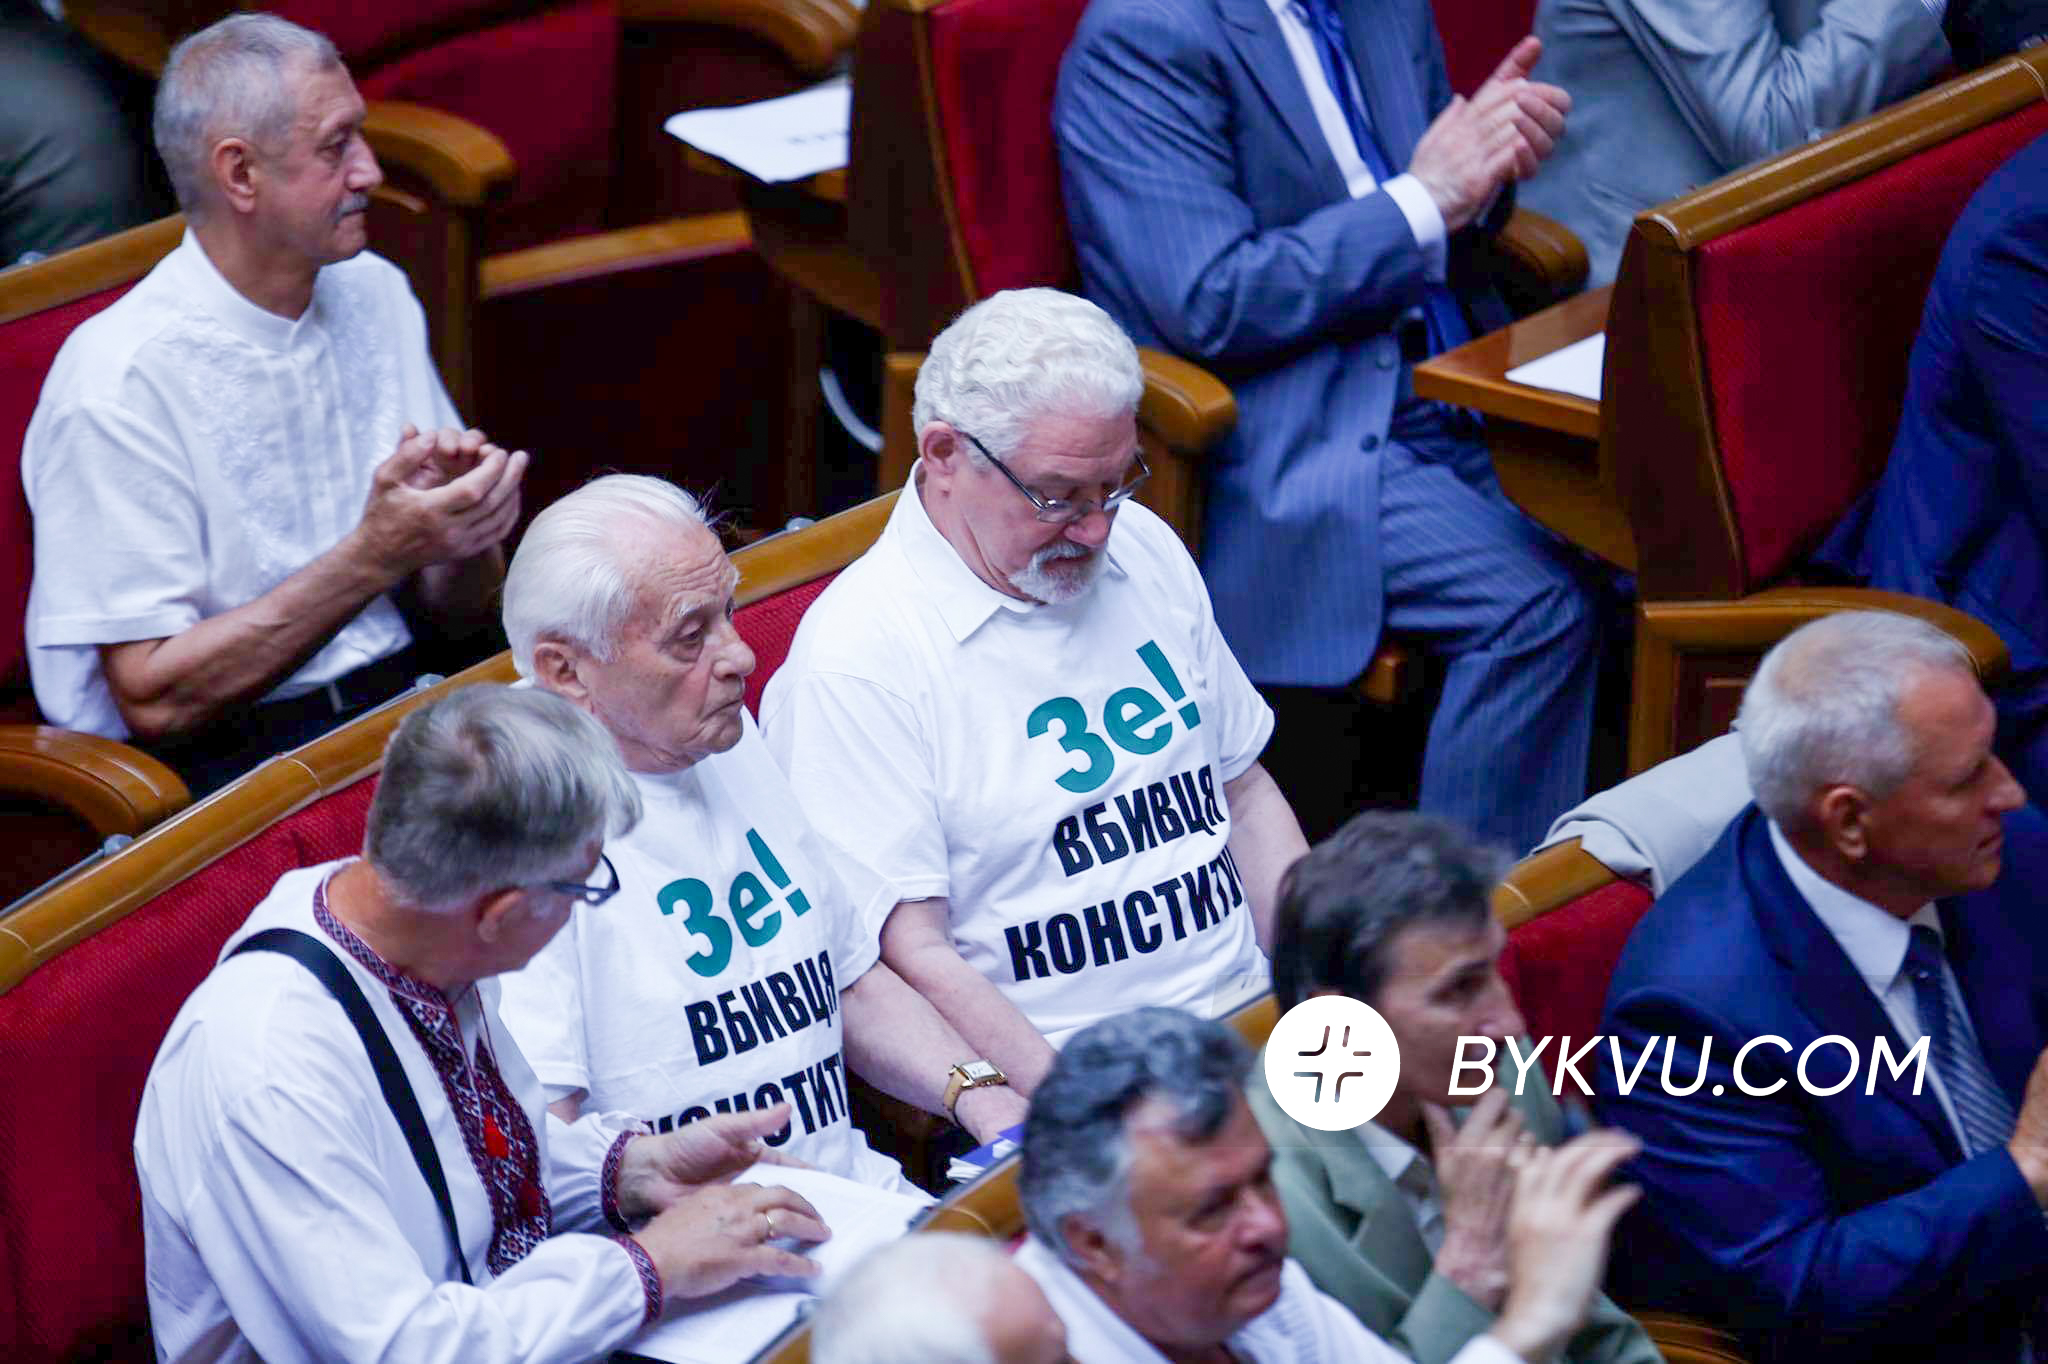  Степан Хмара и Виктор Шишкин в футболках "Зе - убийца Конституции"